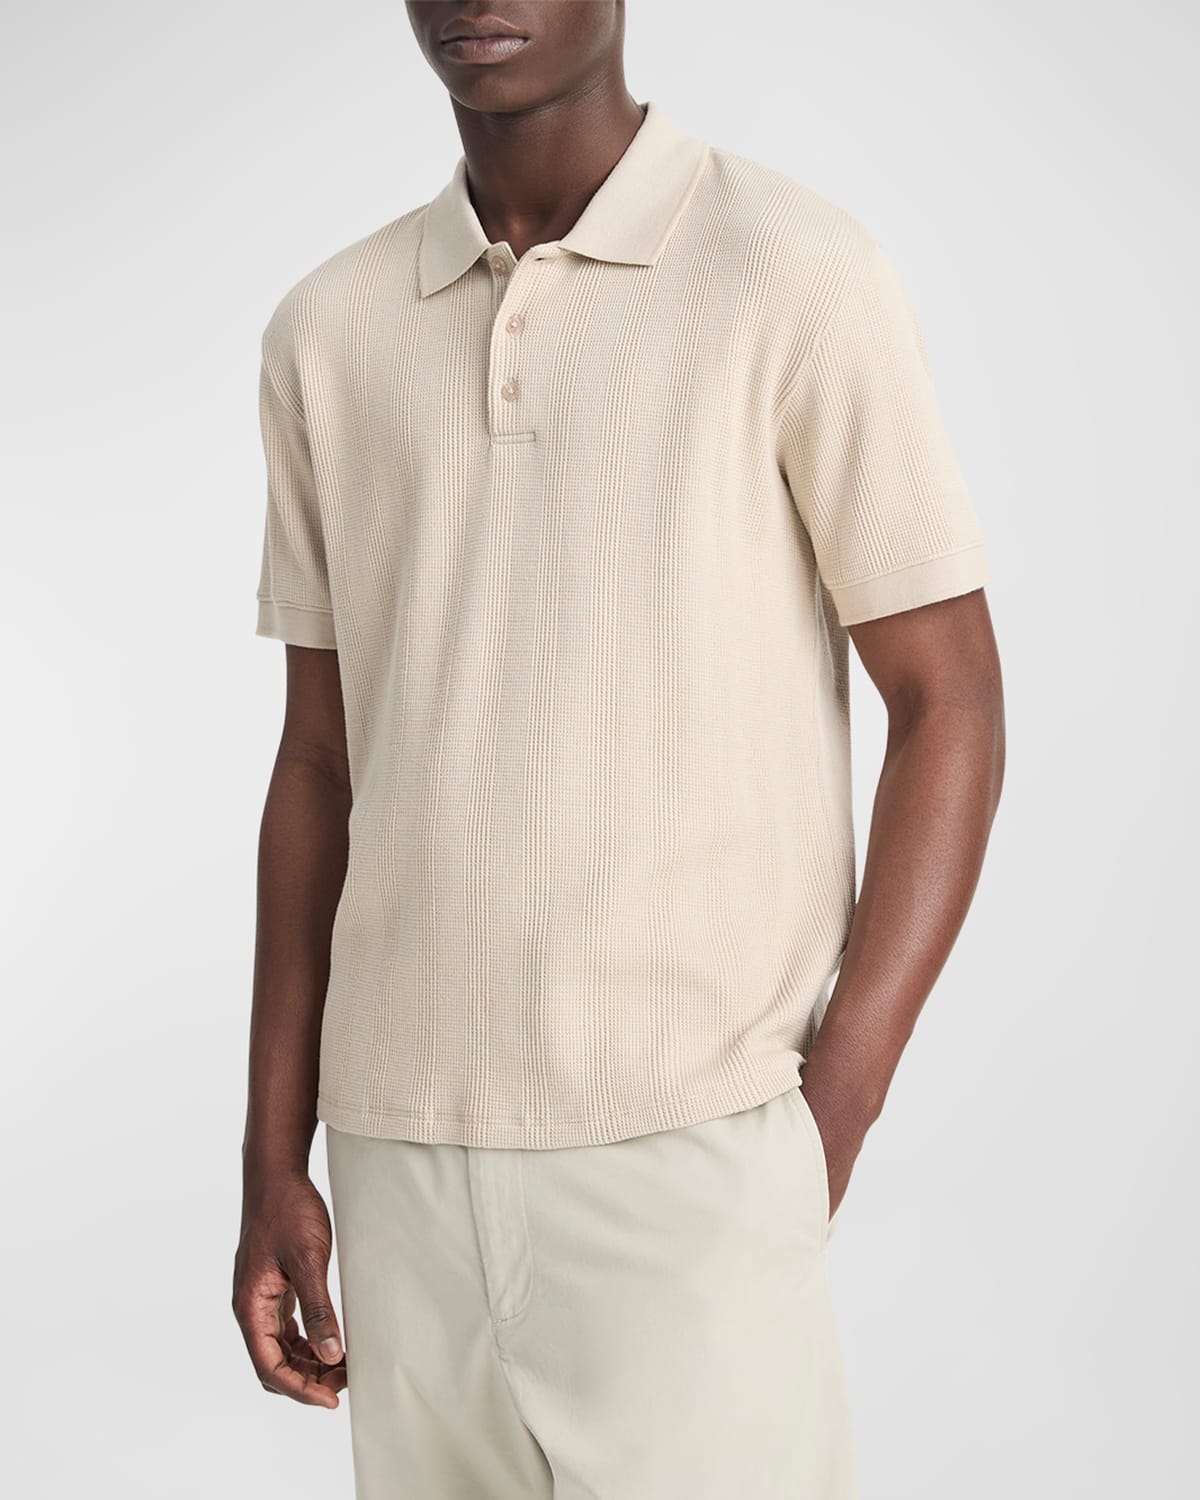 Men's Variegated Textured Stripe Polo Shirt